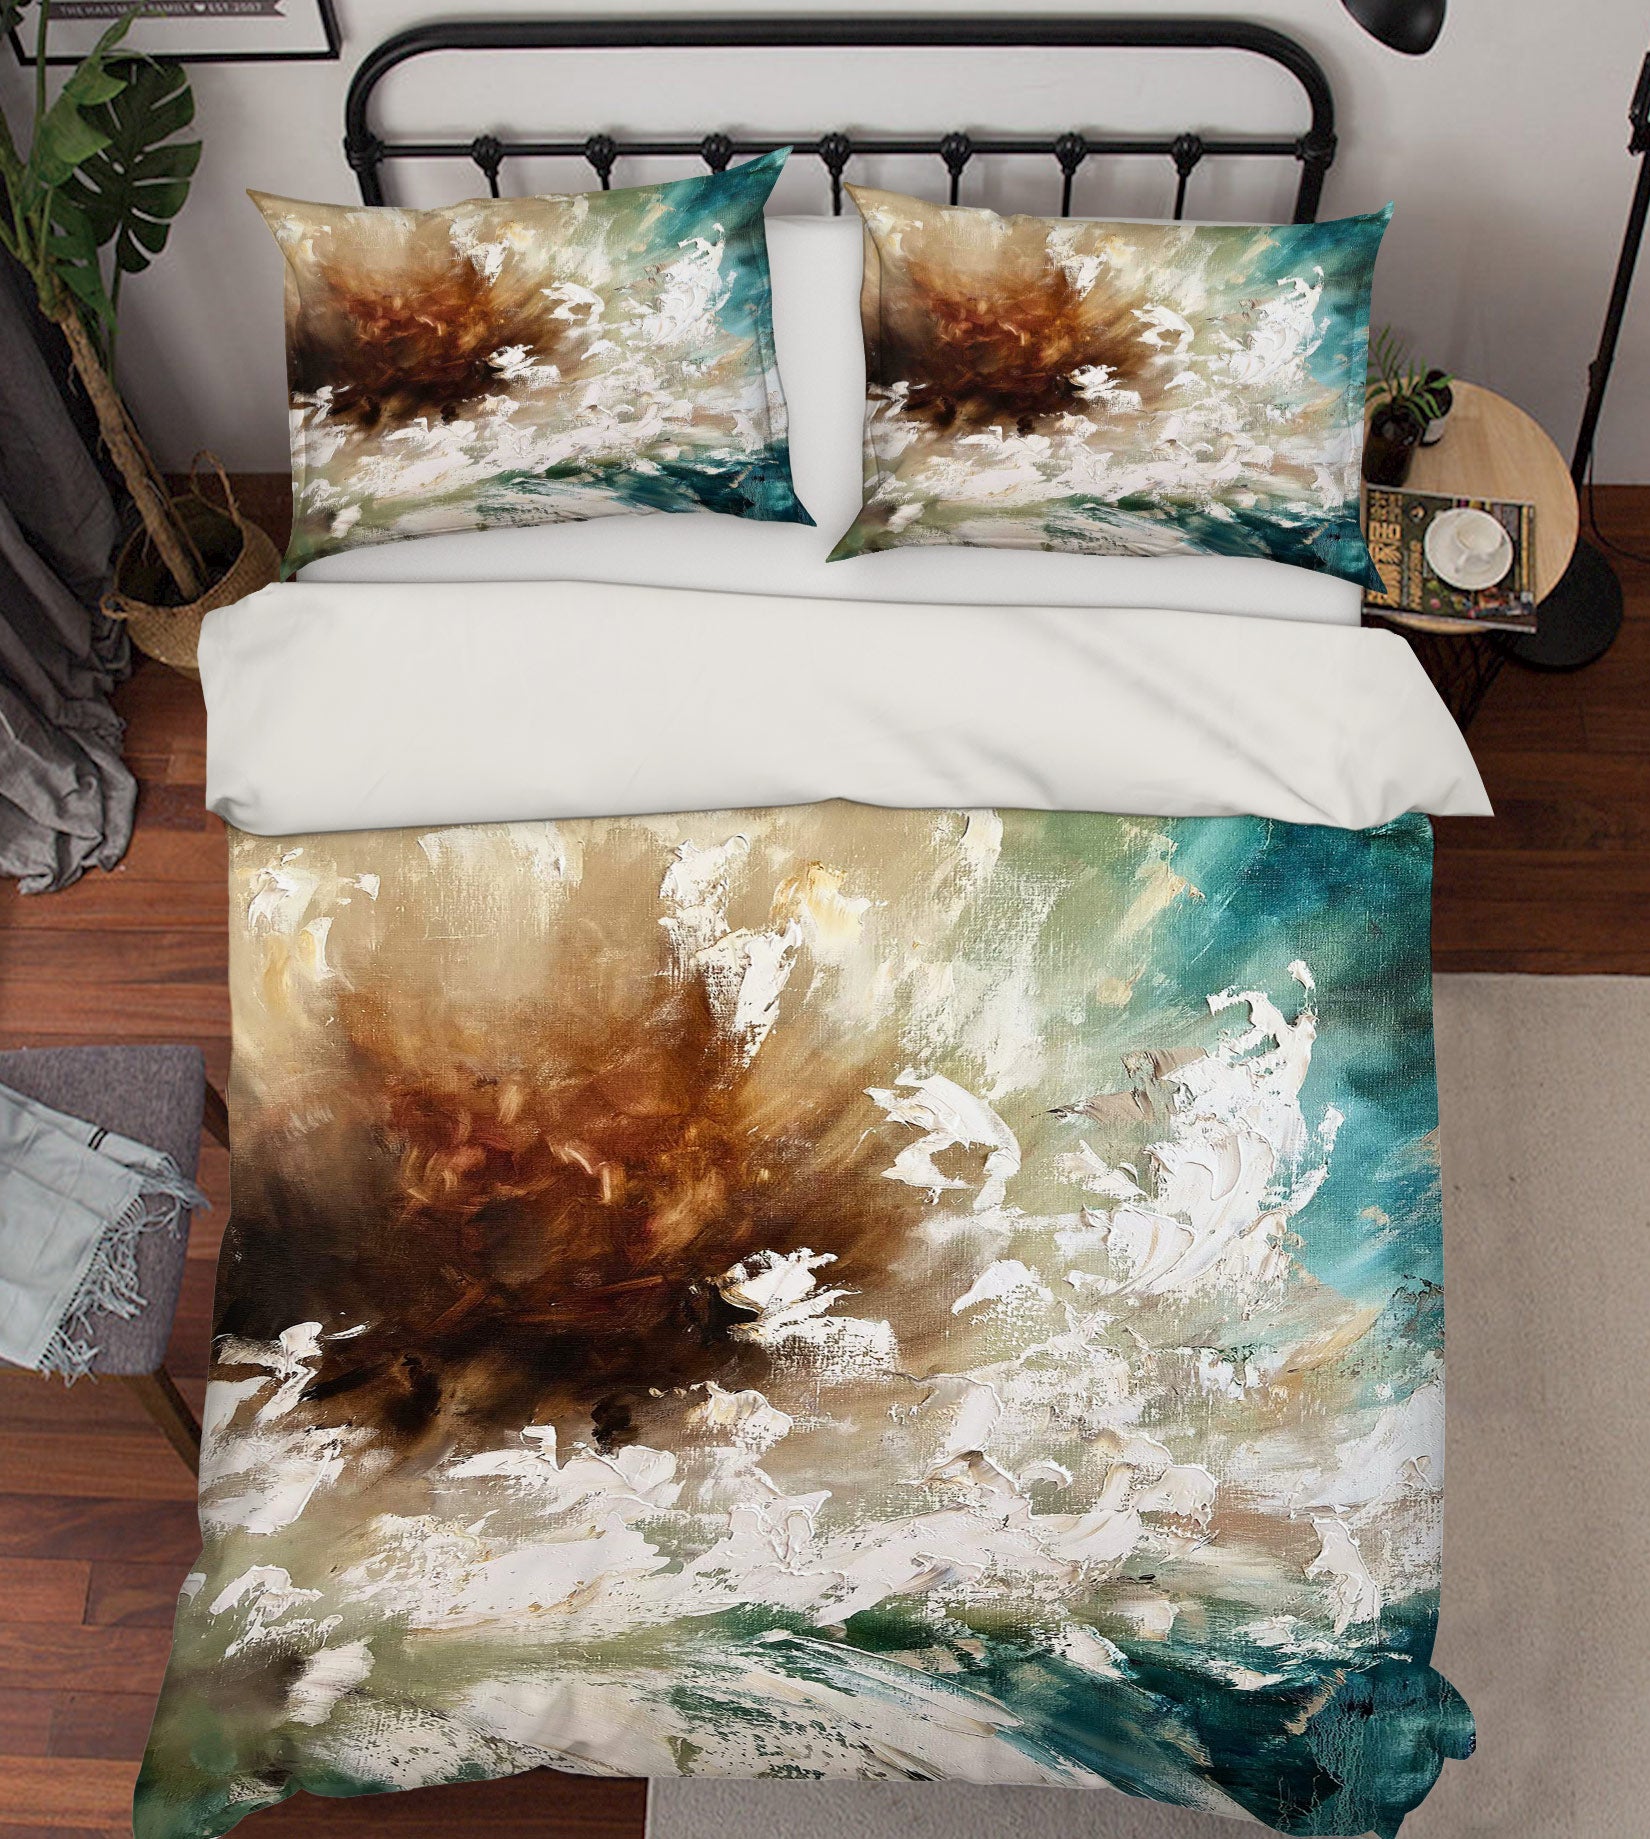 3D Blooming Flower 487 Skromova Marina Bedding Bed Pillowcases Quilt